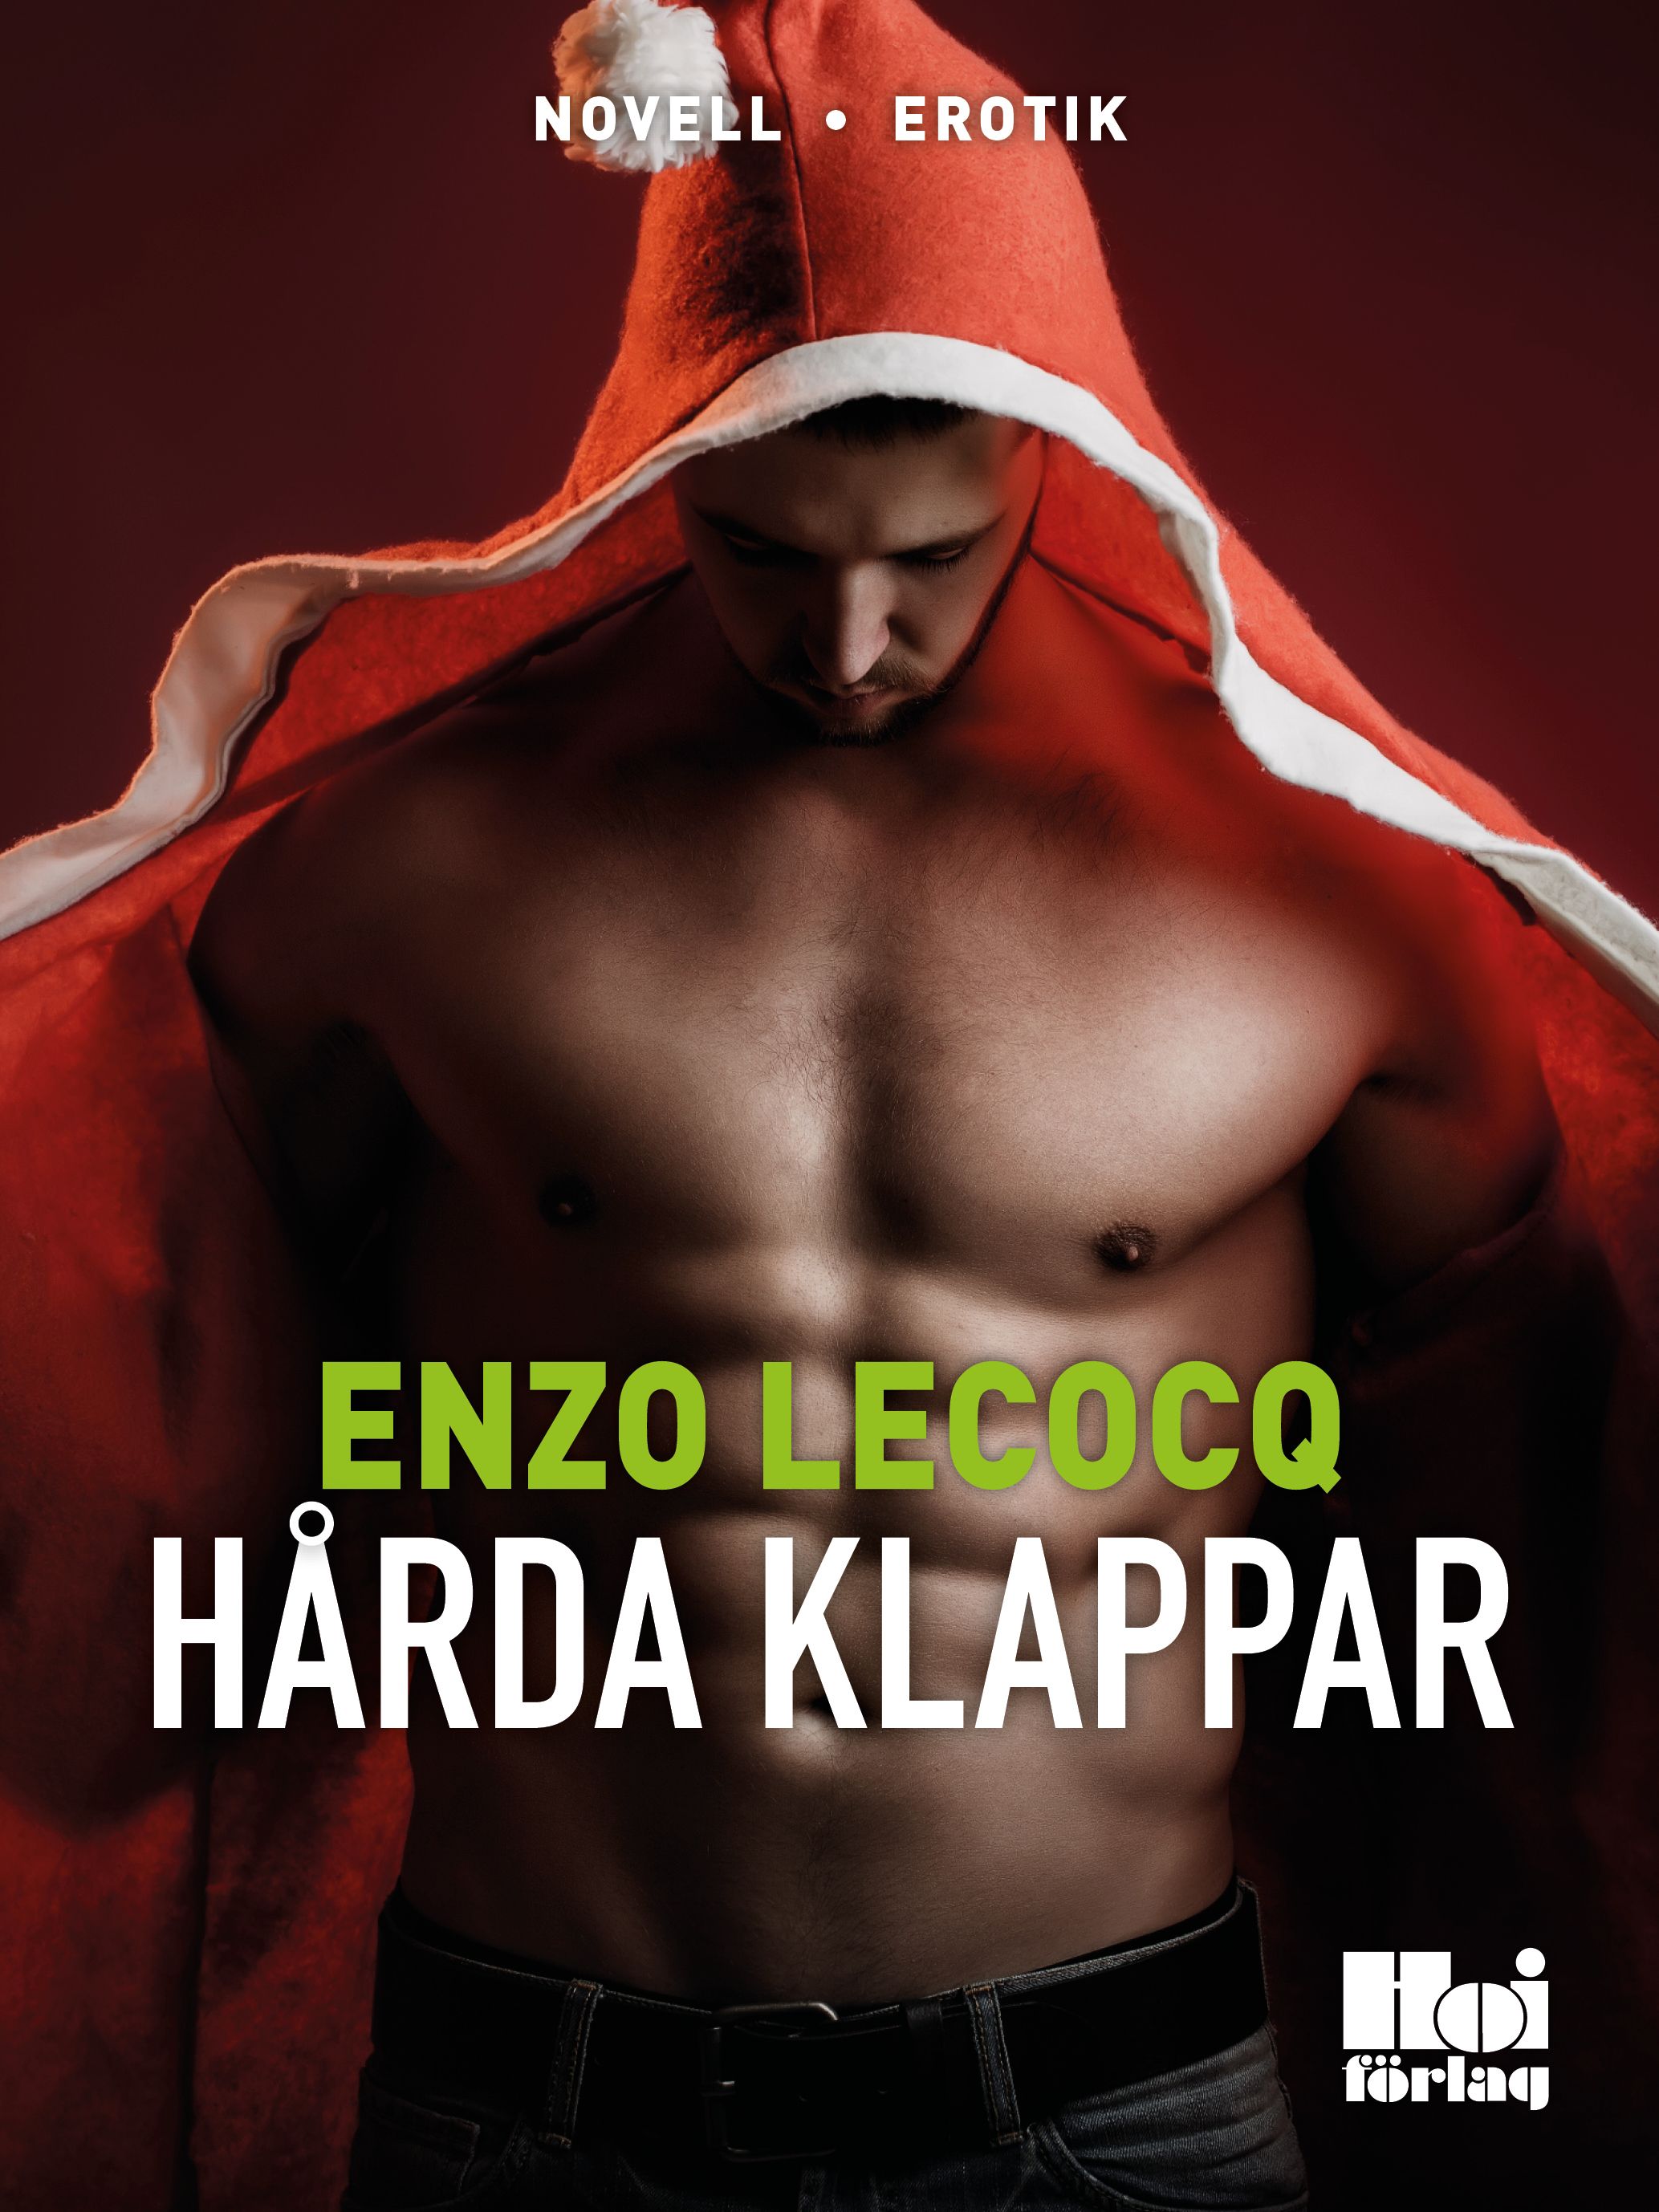 Hårda klappar, e-bok av Enzo Lecocq